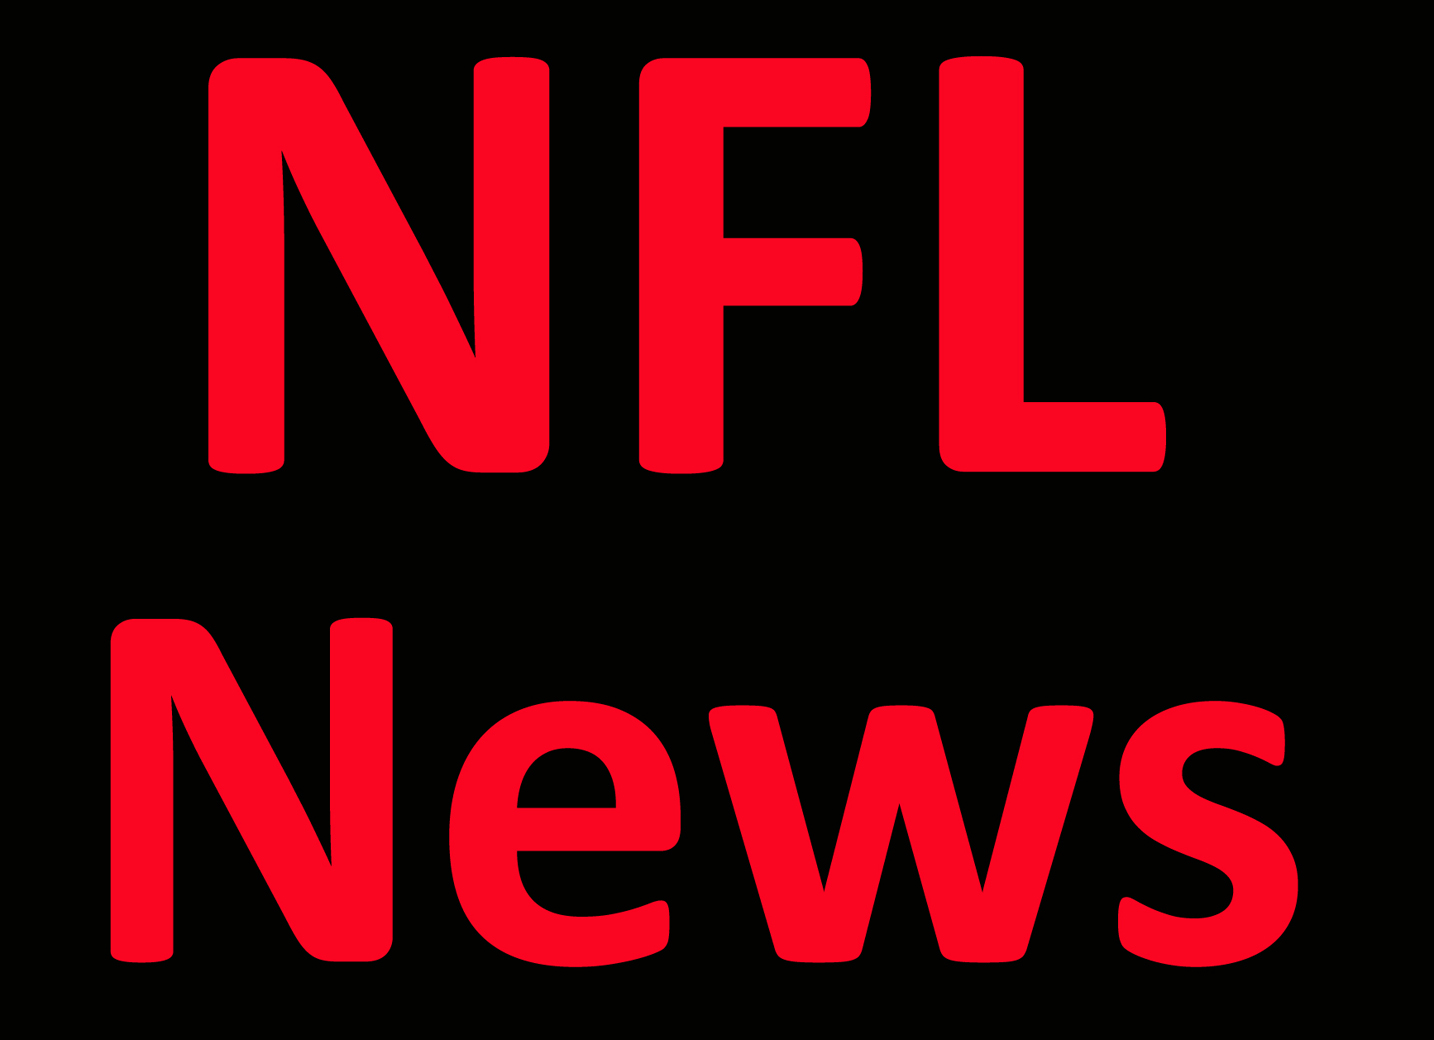 NFL News: Ex-Commander Everett placed on house arrest Per Report